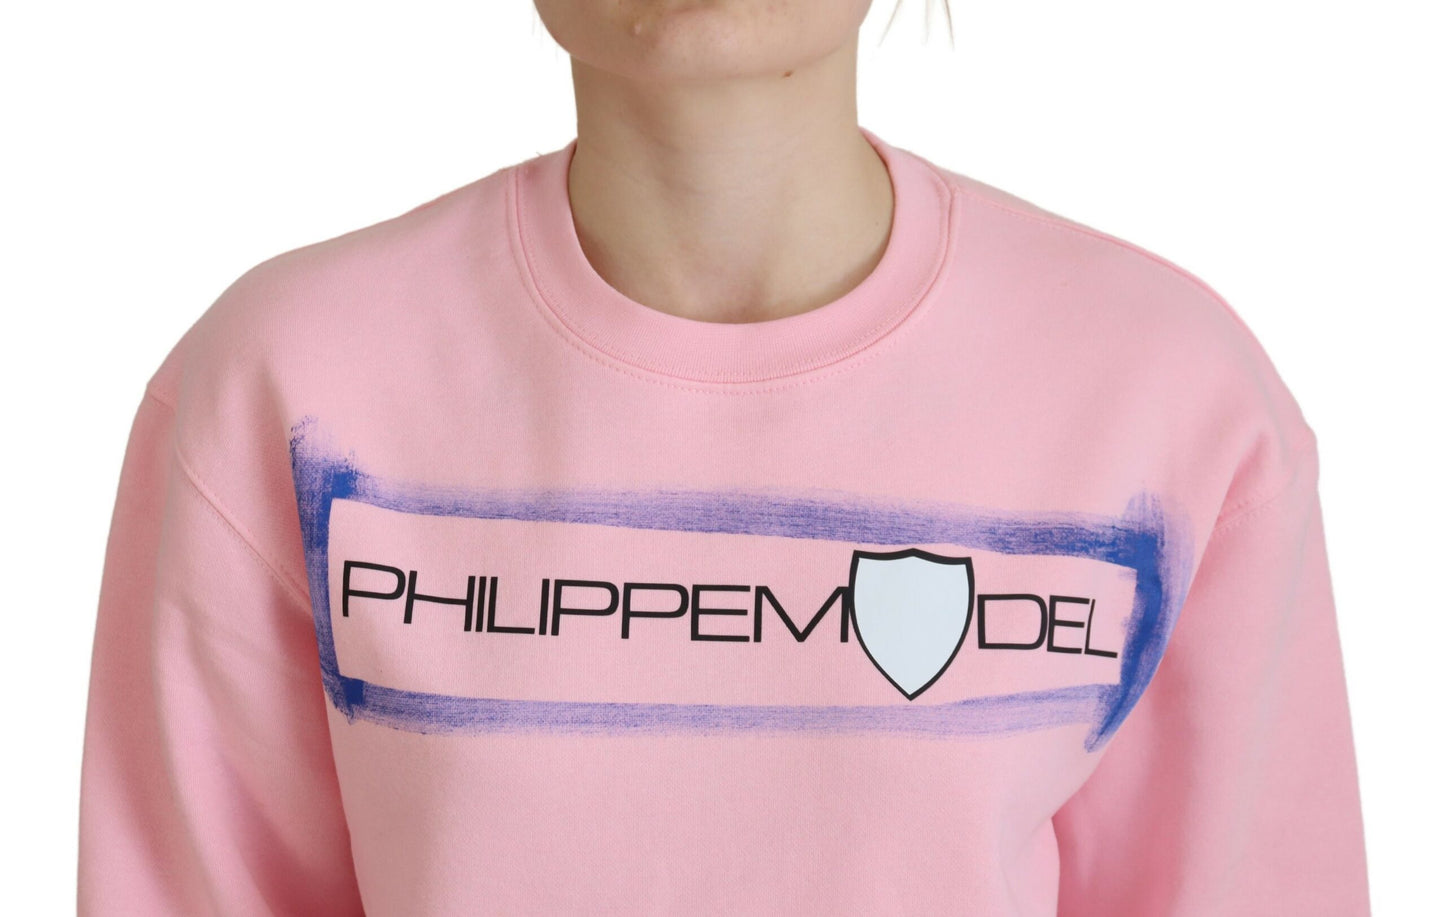 Elegant Pink Long Sleeve Pullover Sweater